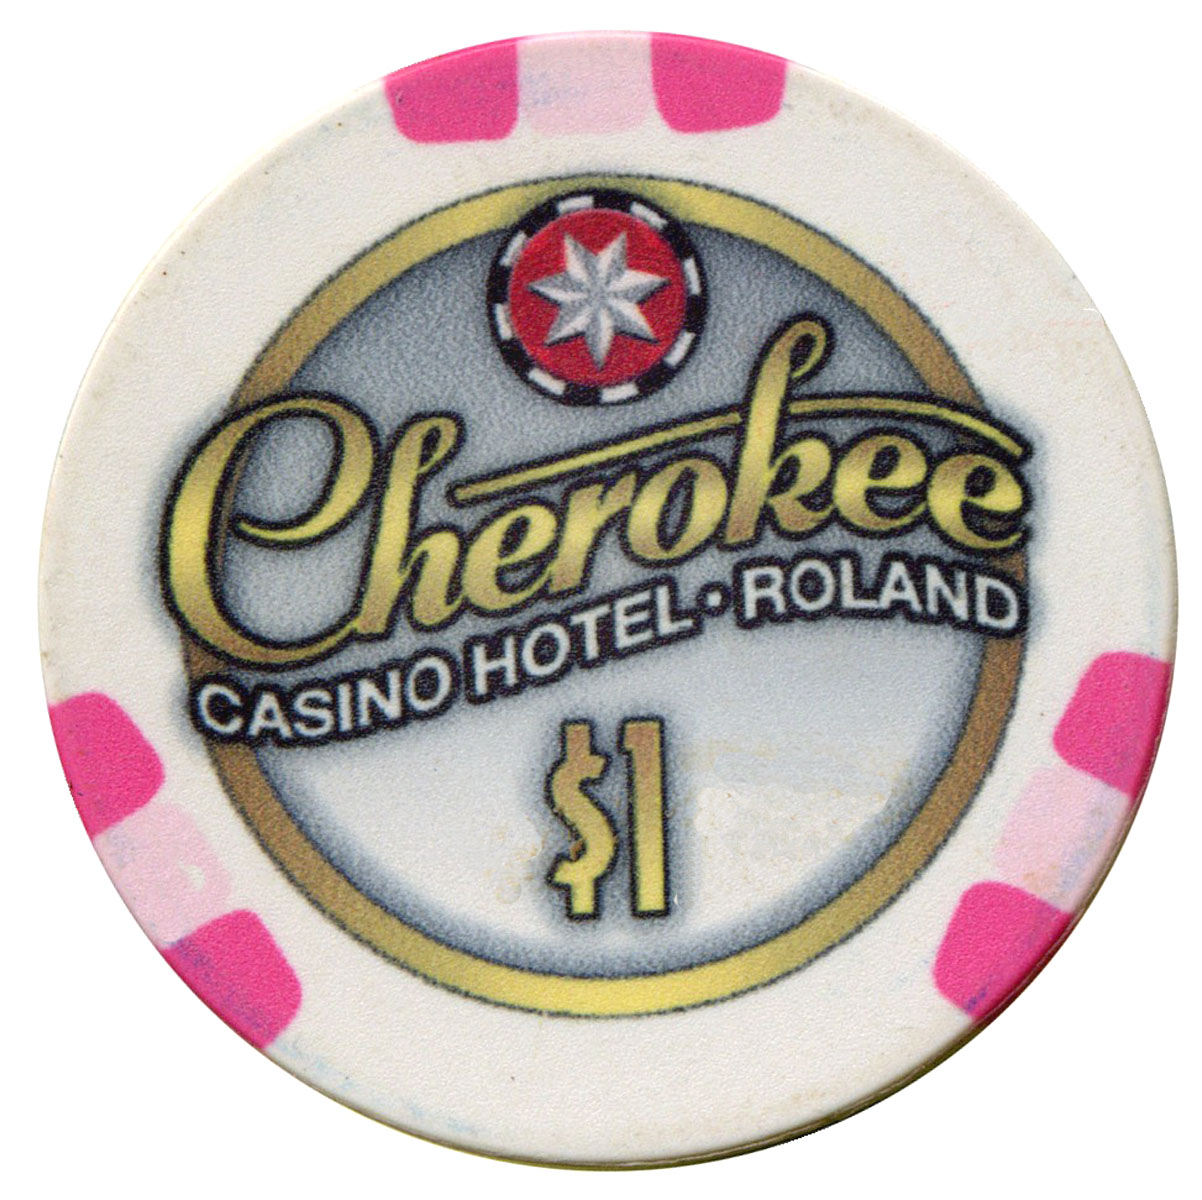 rooms at cherokee casino roland ok